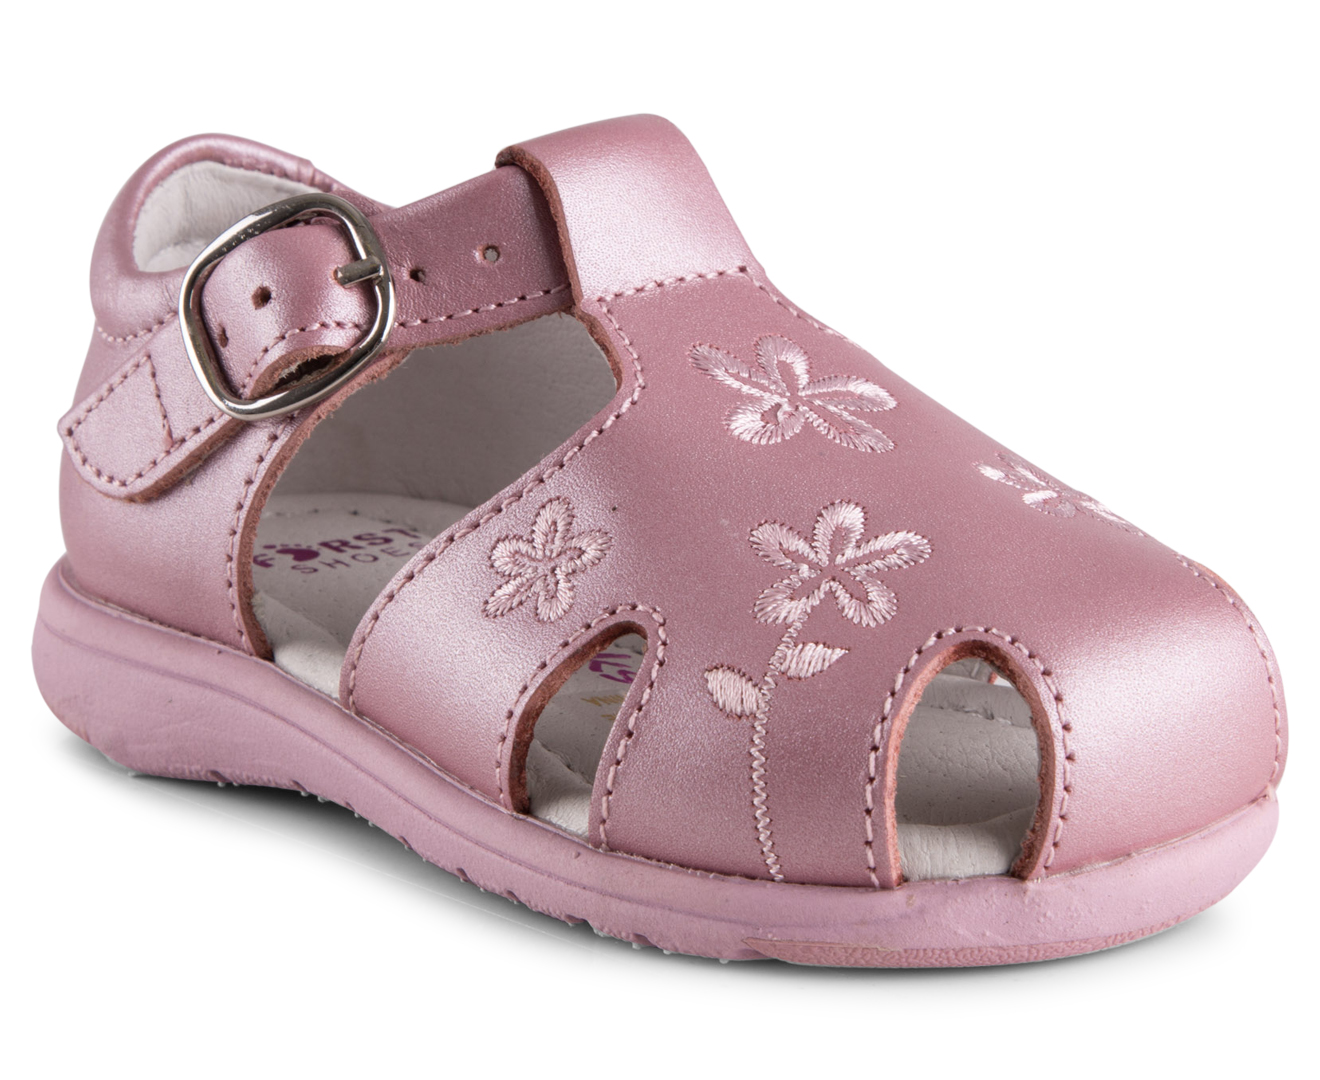 Clarks Kids’ Sabrina Shoes - Pink | Catch.com.au